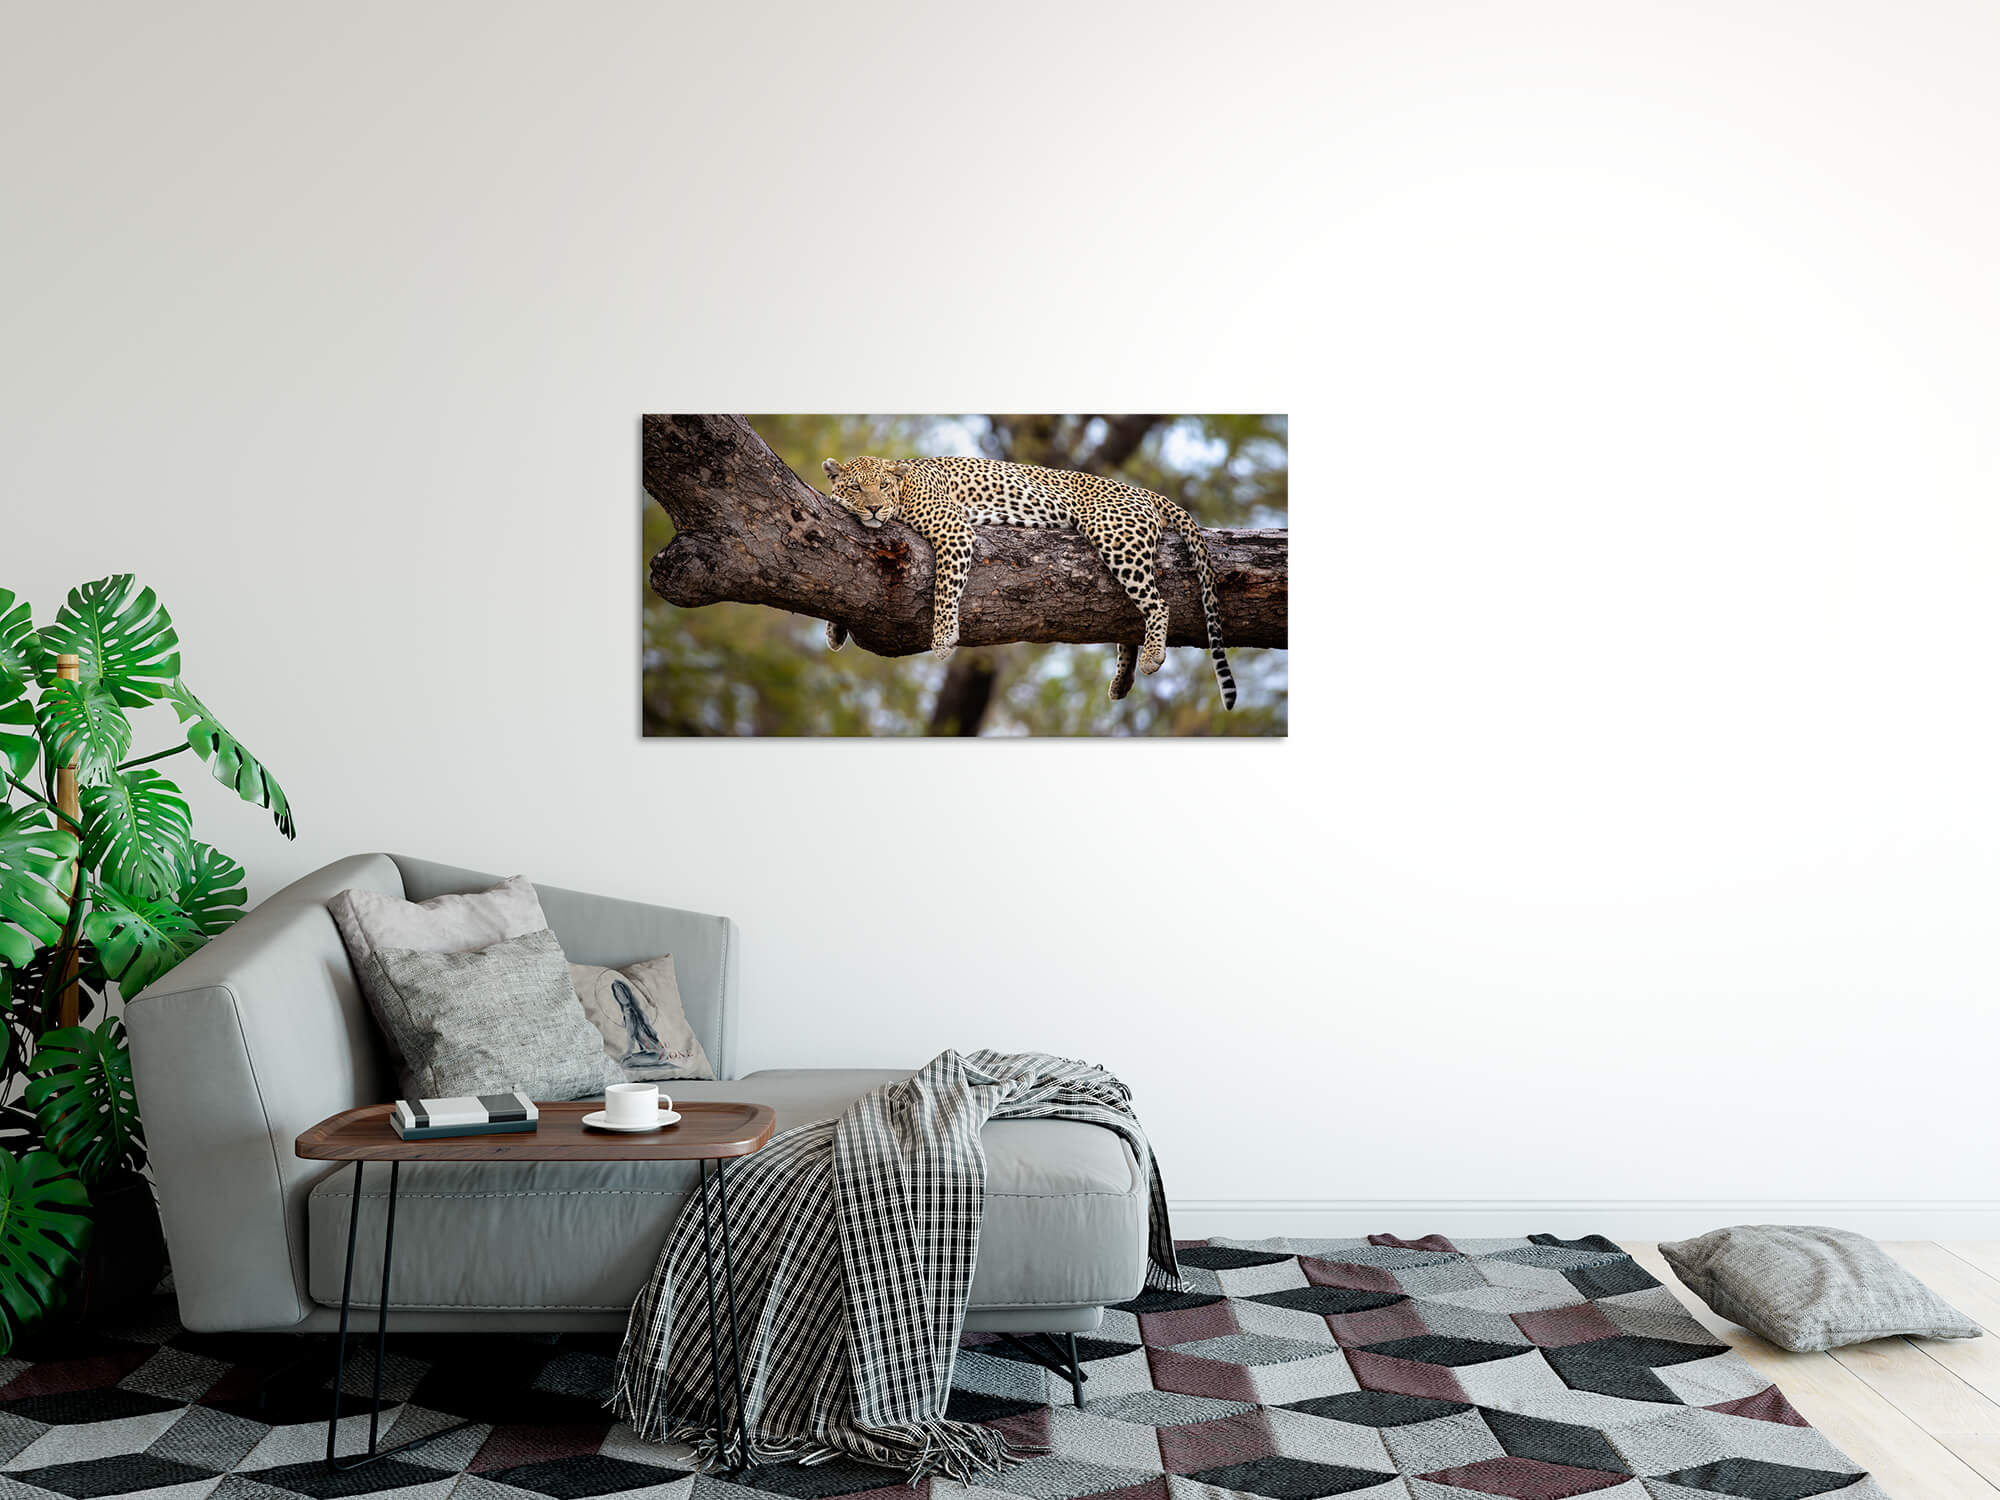 Leinwandbild 120x60cm Leopard döst im Baum Raubkatze Großkatze Wildnis  Afrika | Sinus Art GmbH - Einzigartige Designs, Geschenke , Wandbilder &  Wohnaccessoires zu fairen Preisen